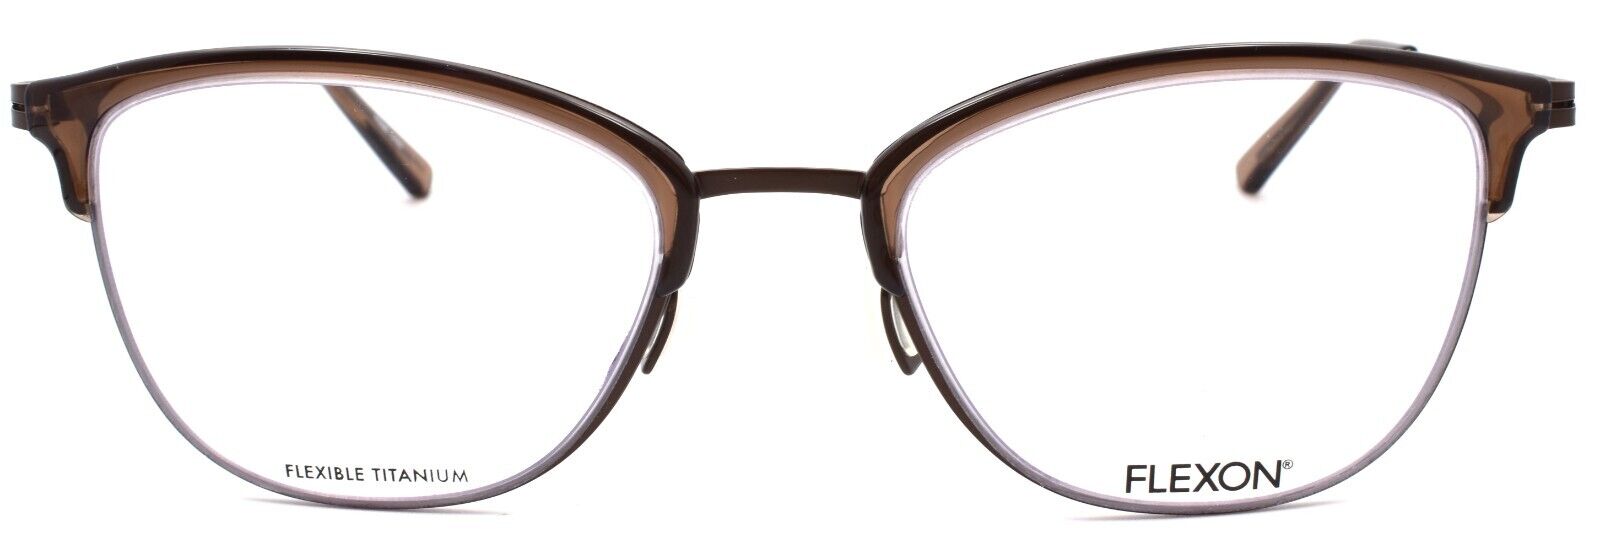 2-Flexon W3023 210 Women's Eyeglasses Frames Brown 52-20-140 Flexible Titanium-883900205344-IKSpecs